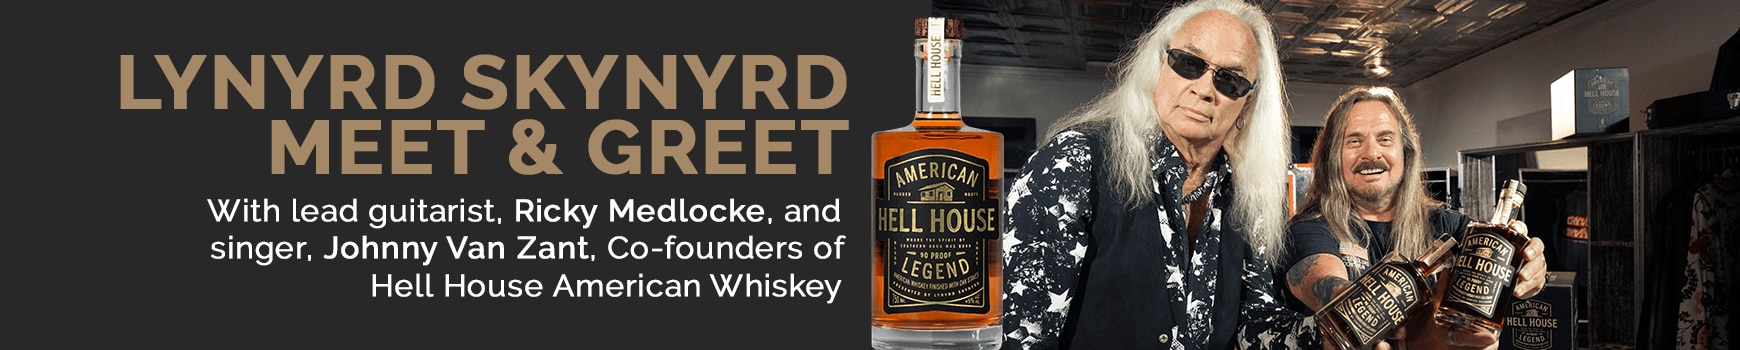 Lynyrd Skynyrd Meet & Greet. With lead guitarist, Rickey Medlocke, and signer, Johnny Van Zant, Co-founders of Hell House American Whiskey